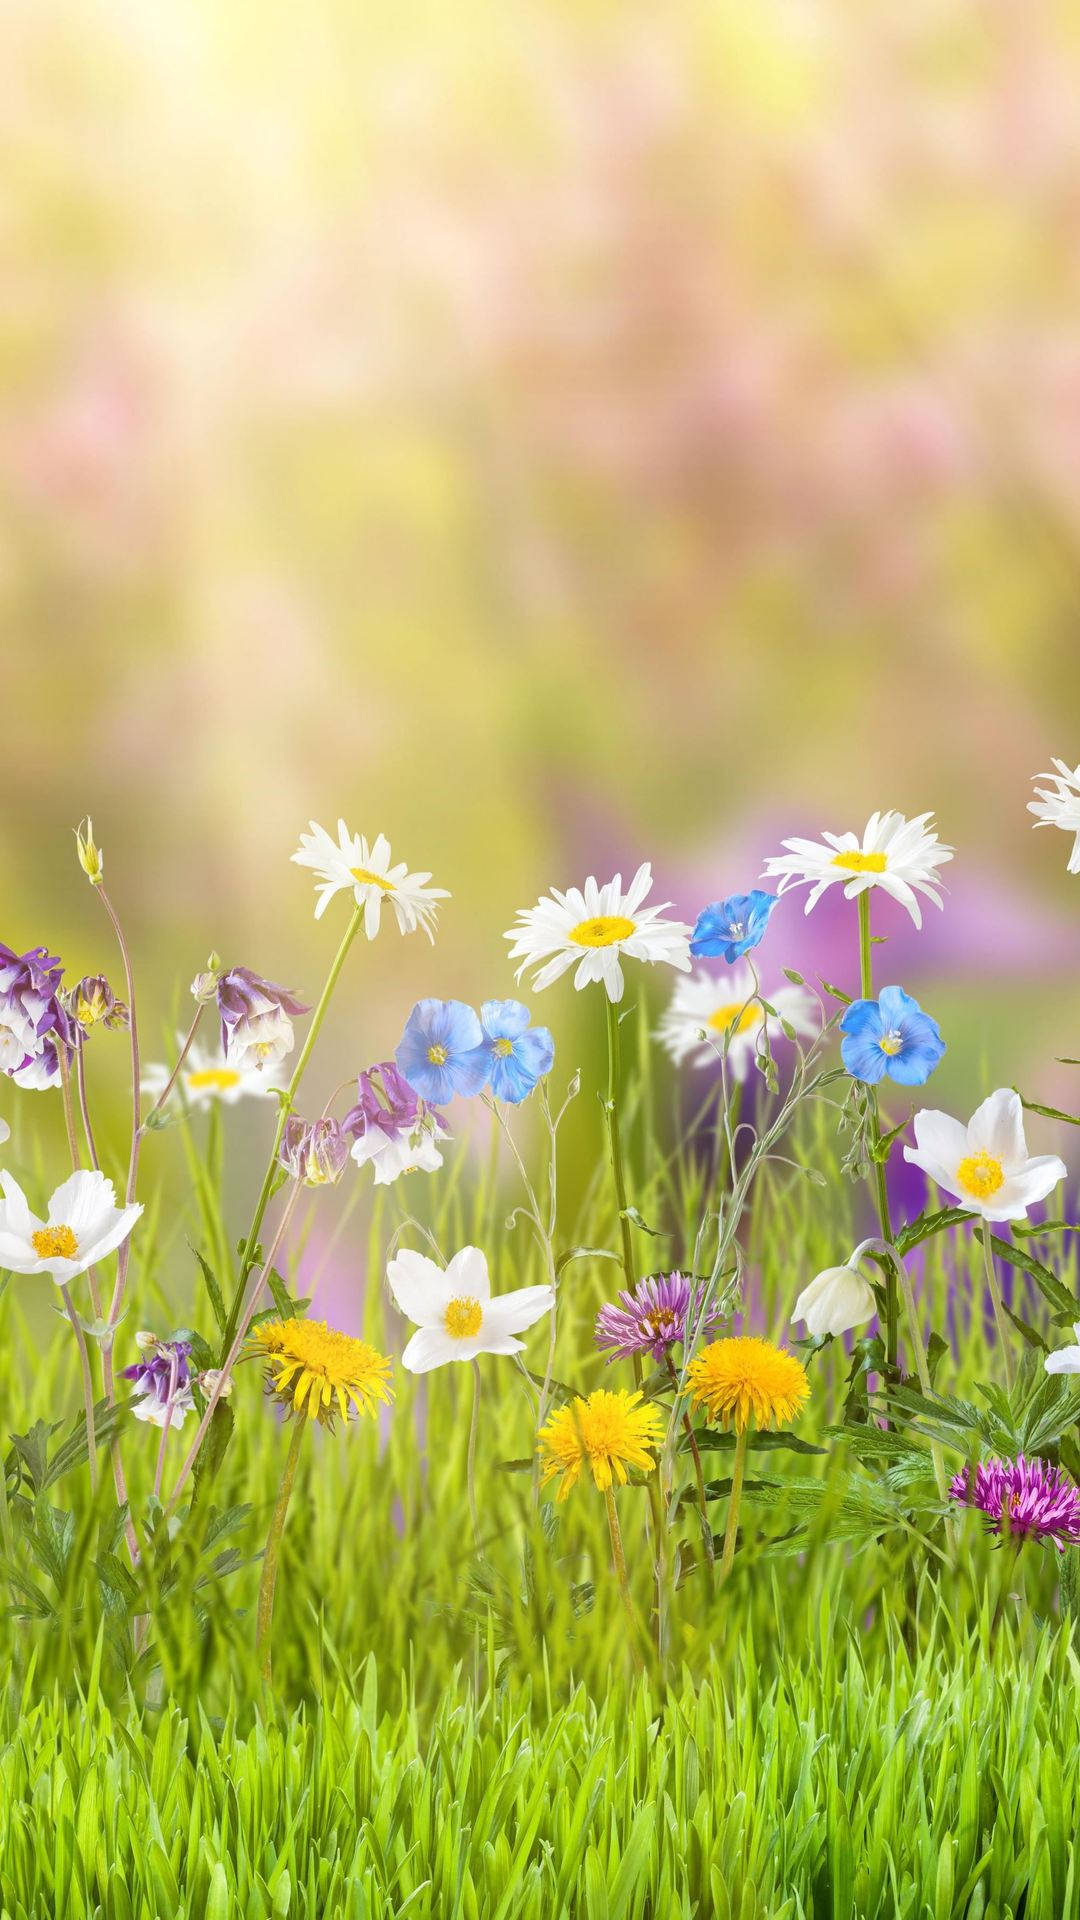 Free Spring Flower iPhone Wallpaper Downloads, Spring Flower iPhone Wallpaper for FREE